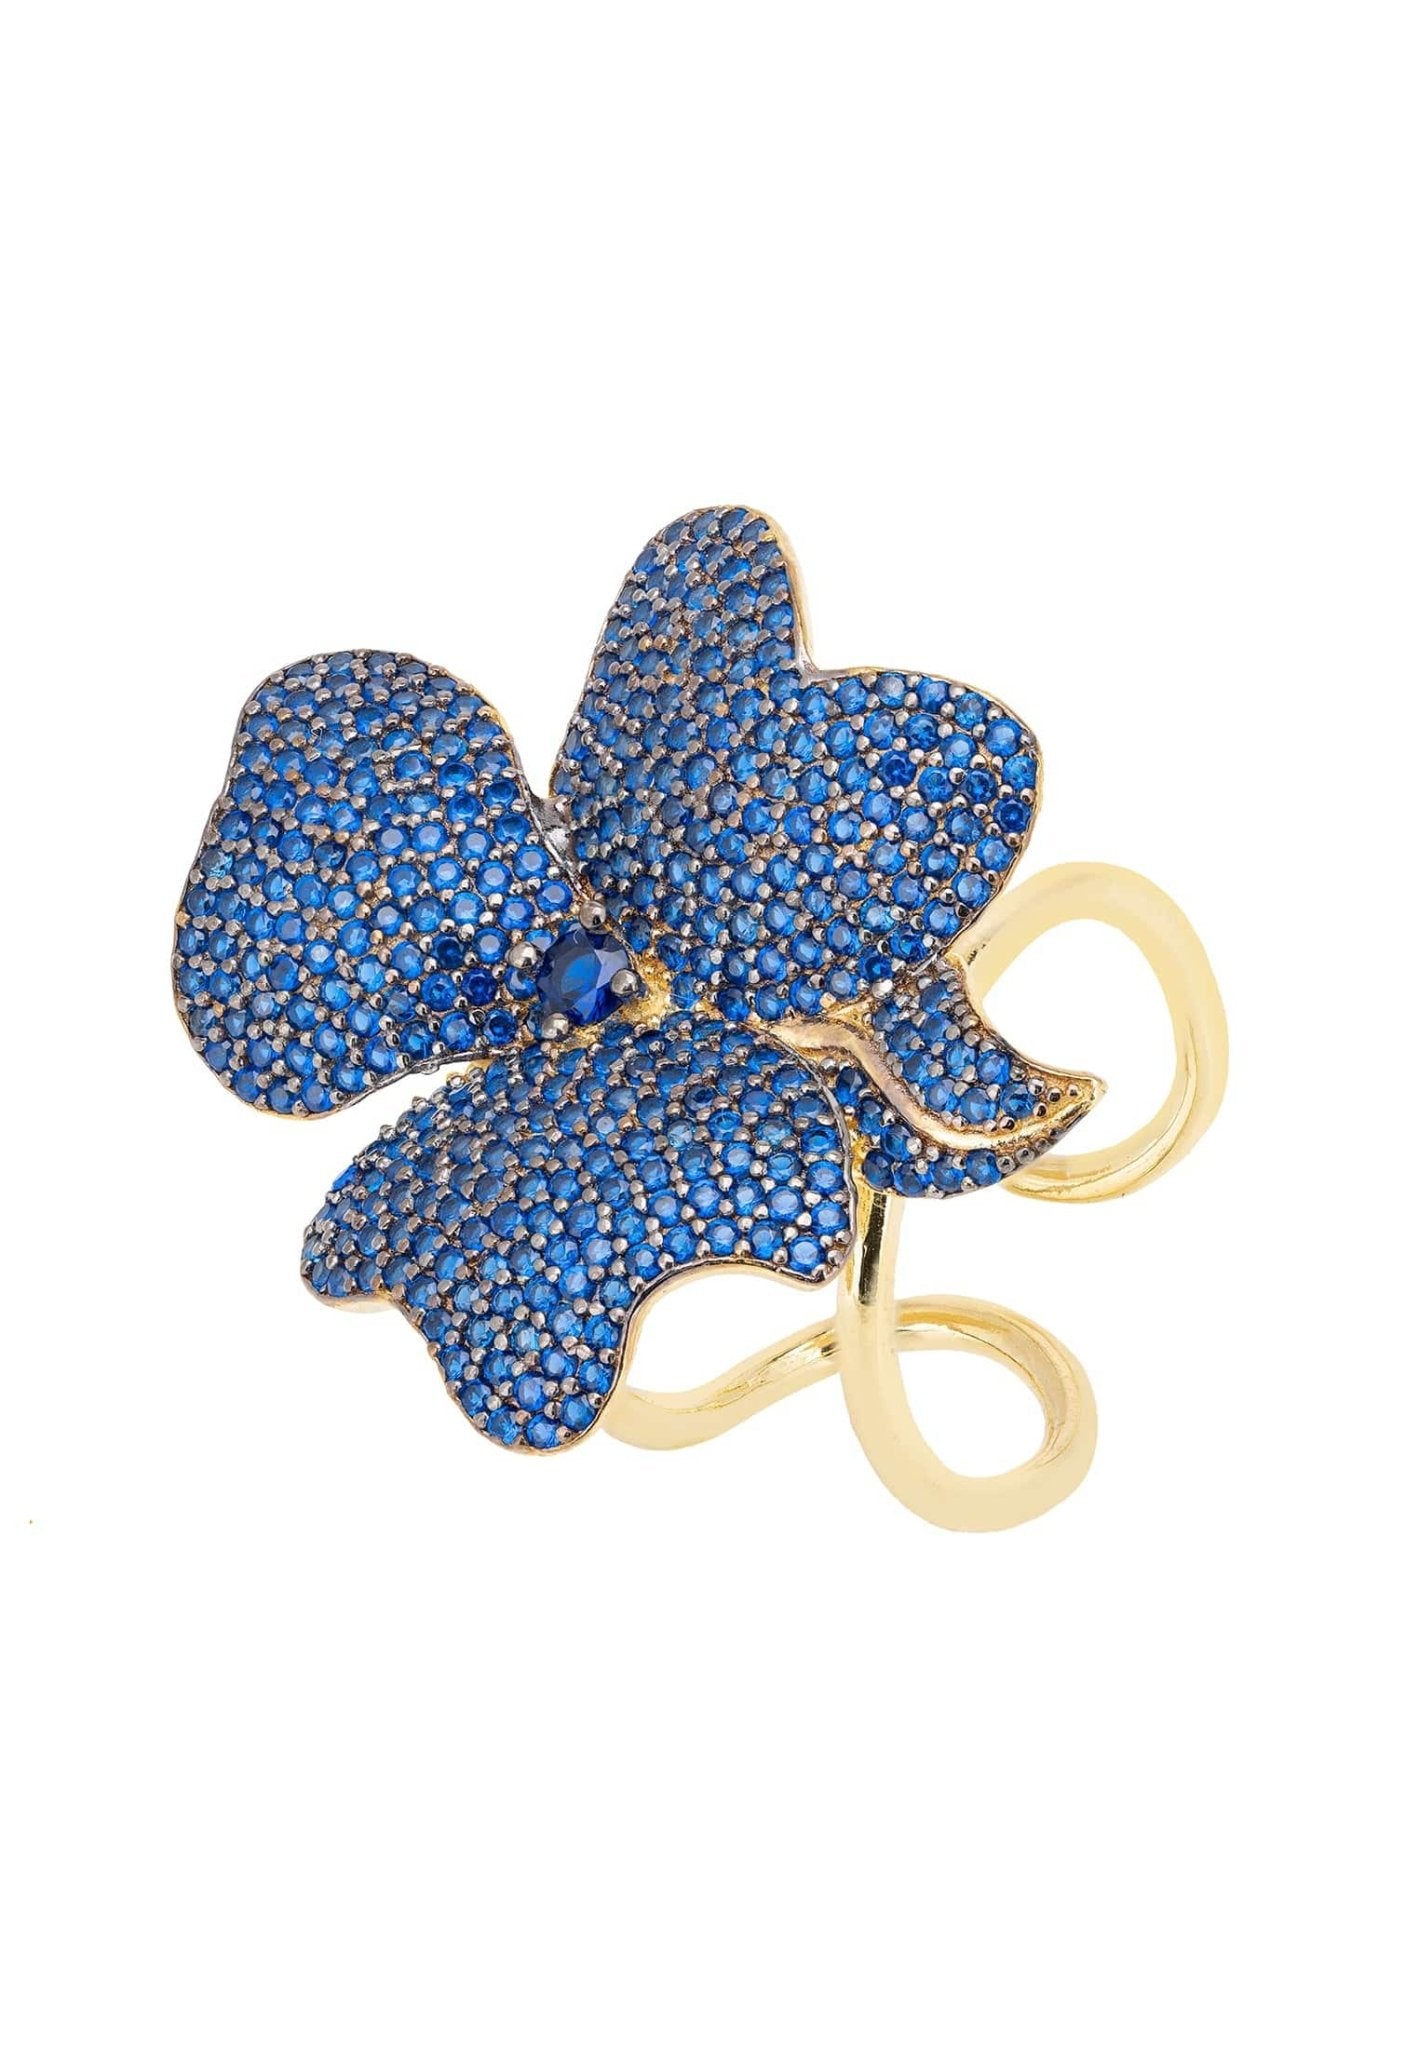 Flower Cocktail Ring Gold Sapphire Blue - LATELITA Rings